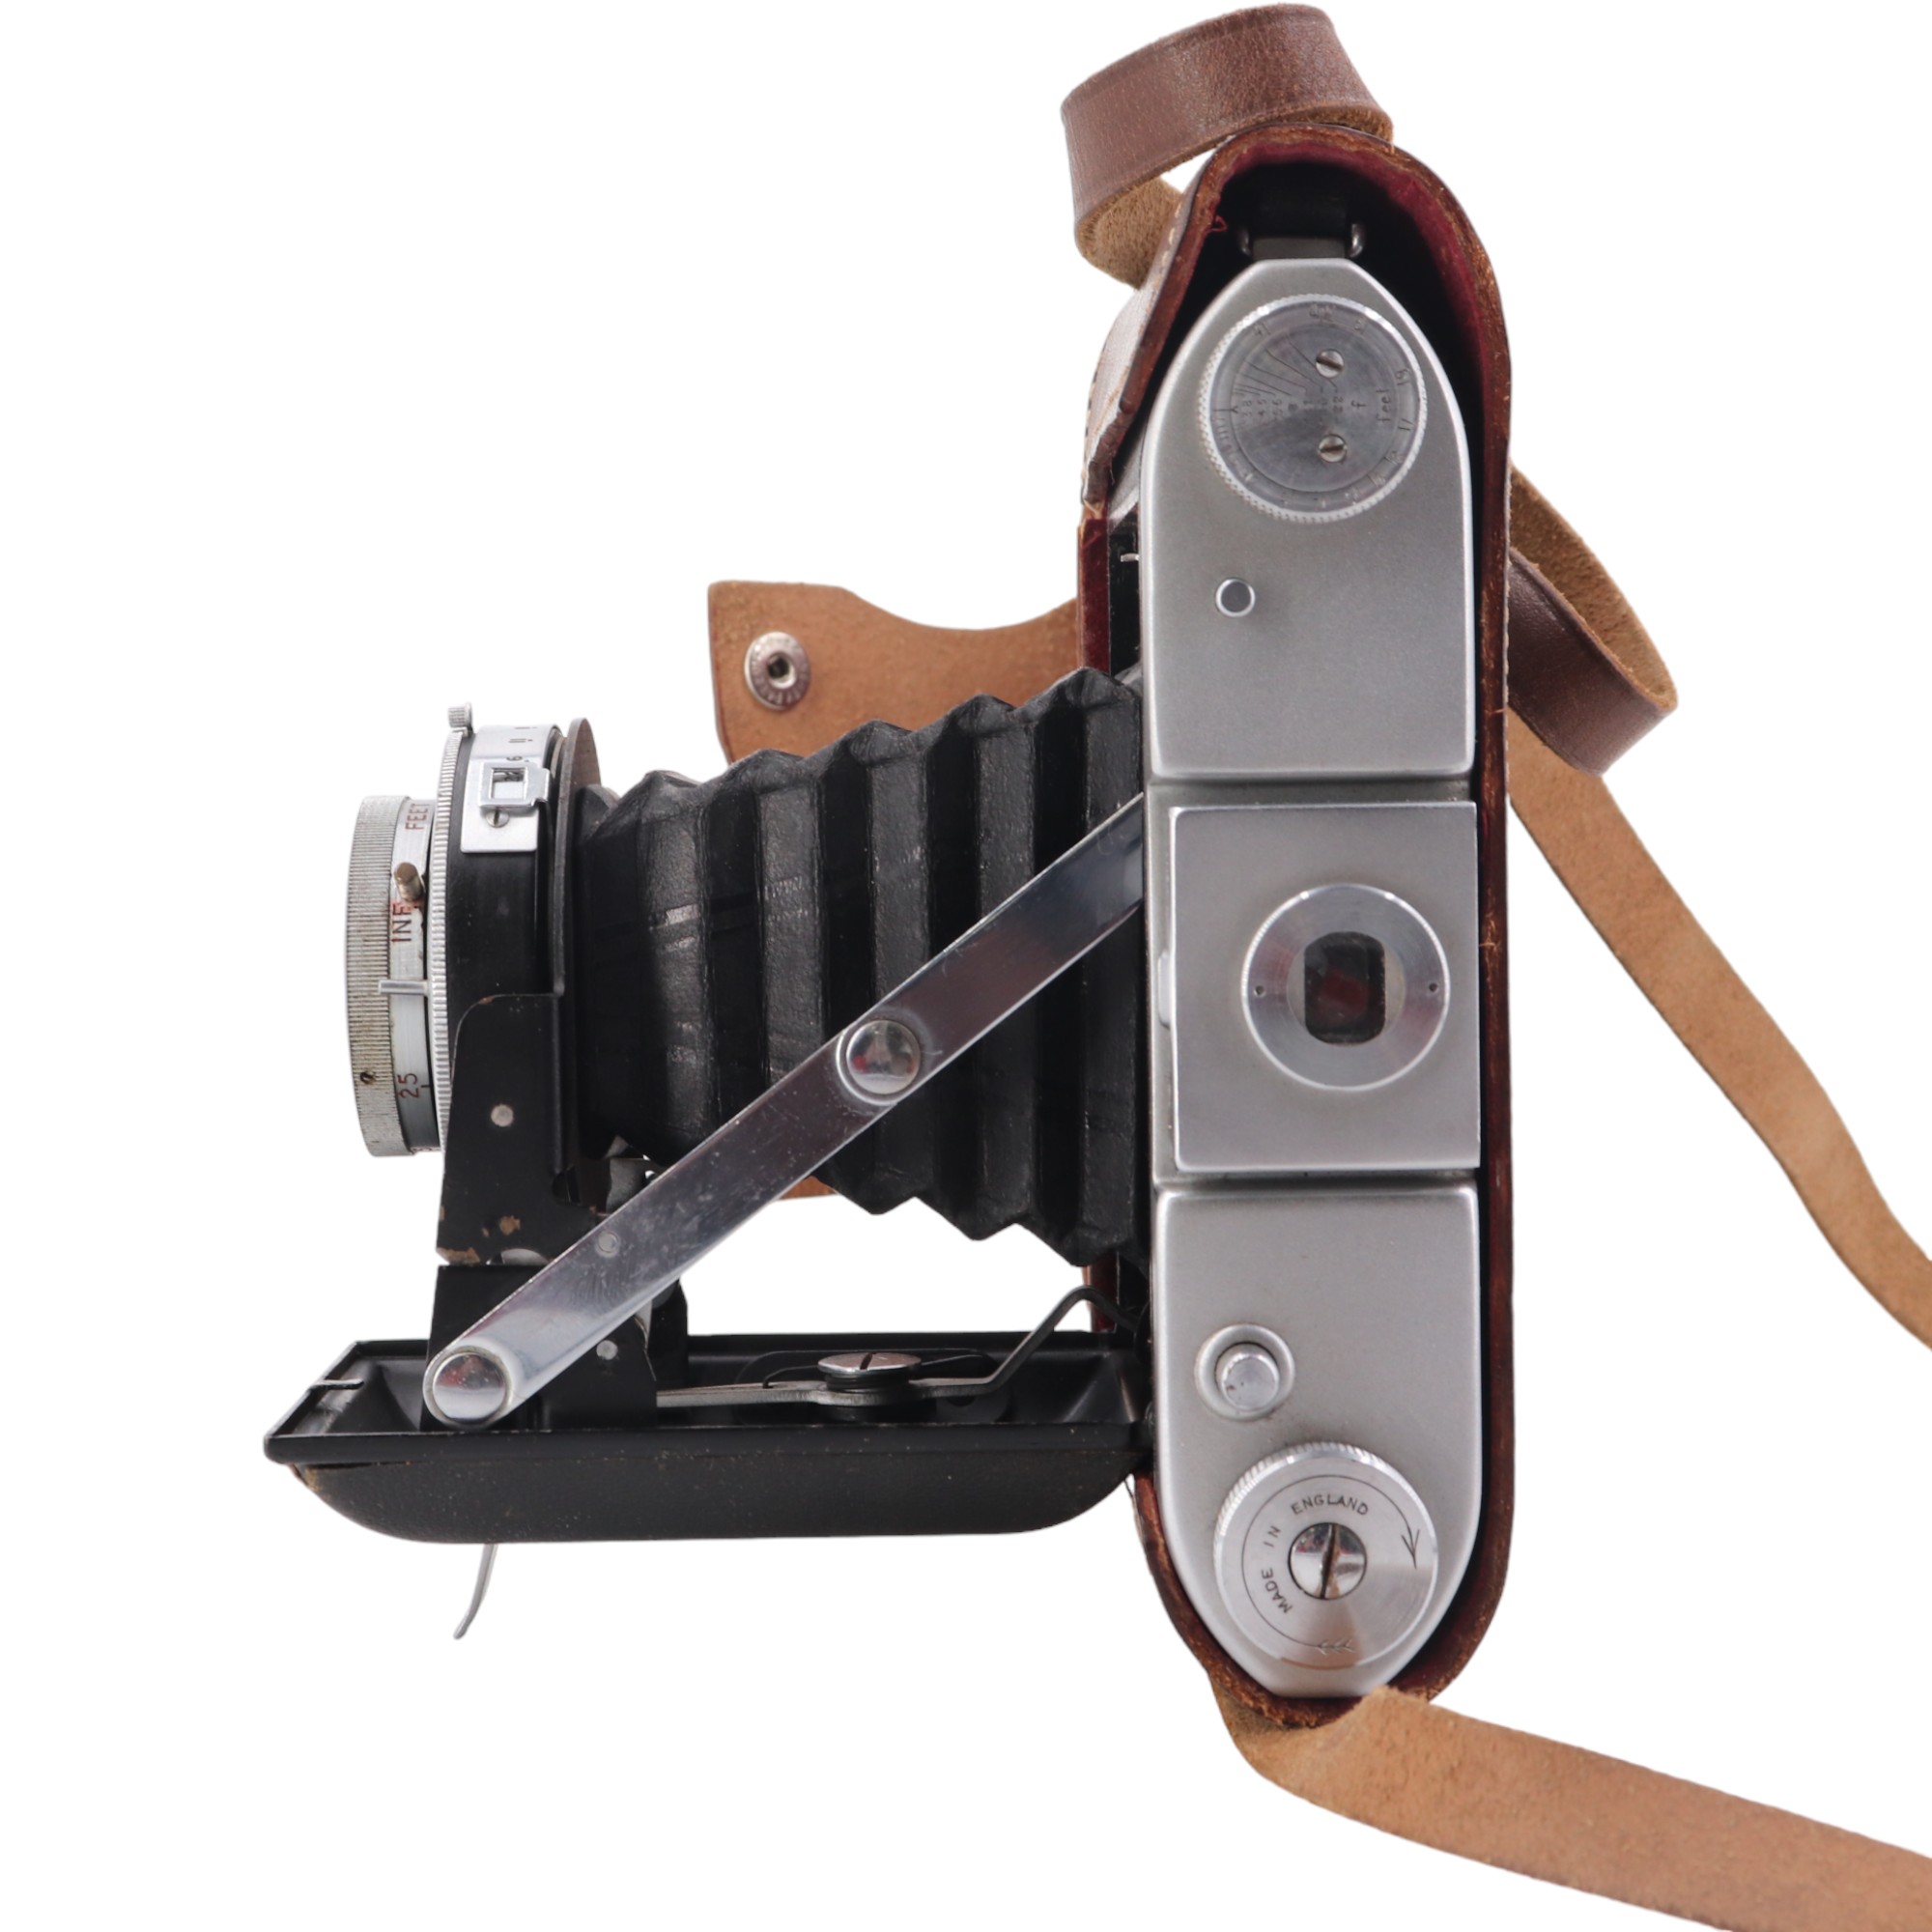 Three vintage rollfilm cameras: an Exacta Verx, a Zeiss Ikon Contaflex and a Ross Ensign Selfix 820 - Image 5 of 5